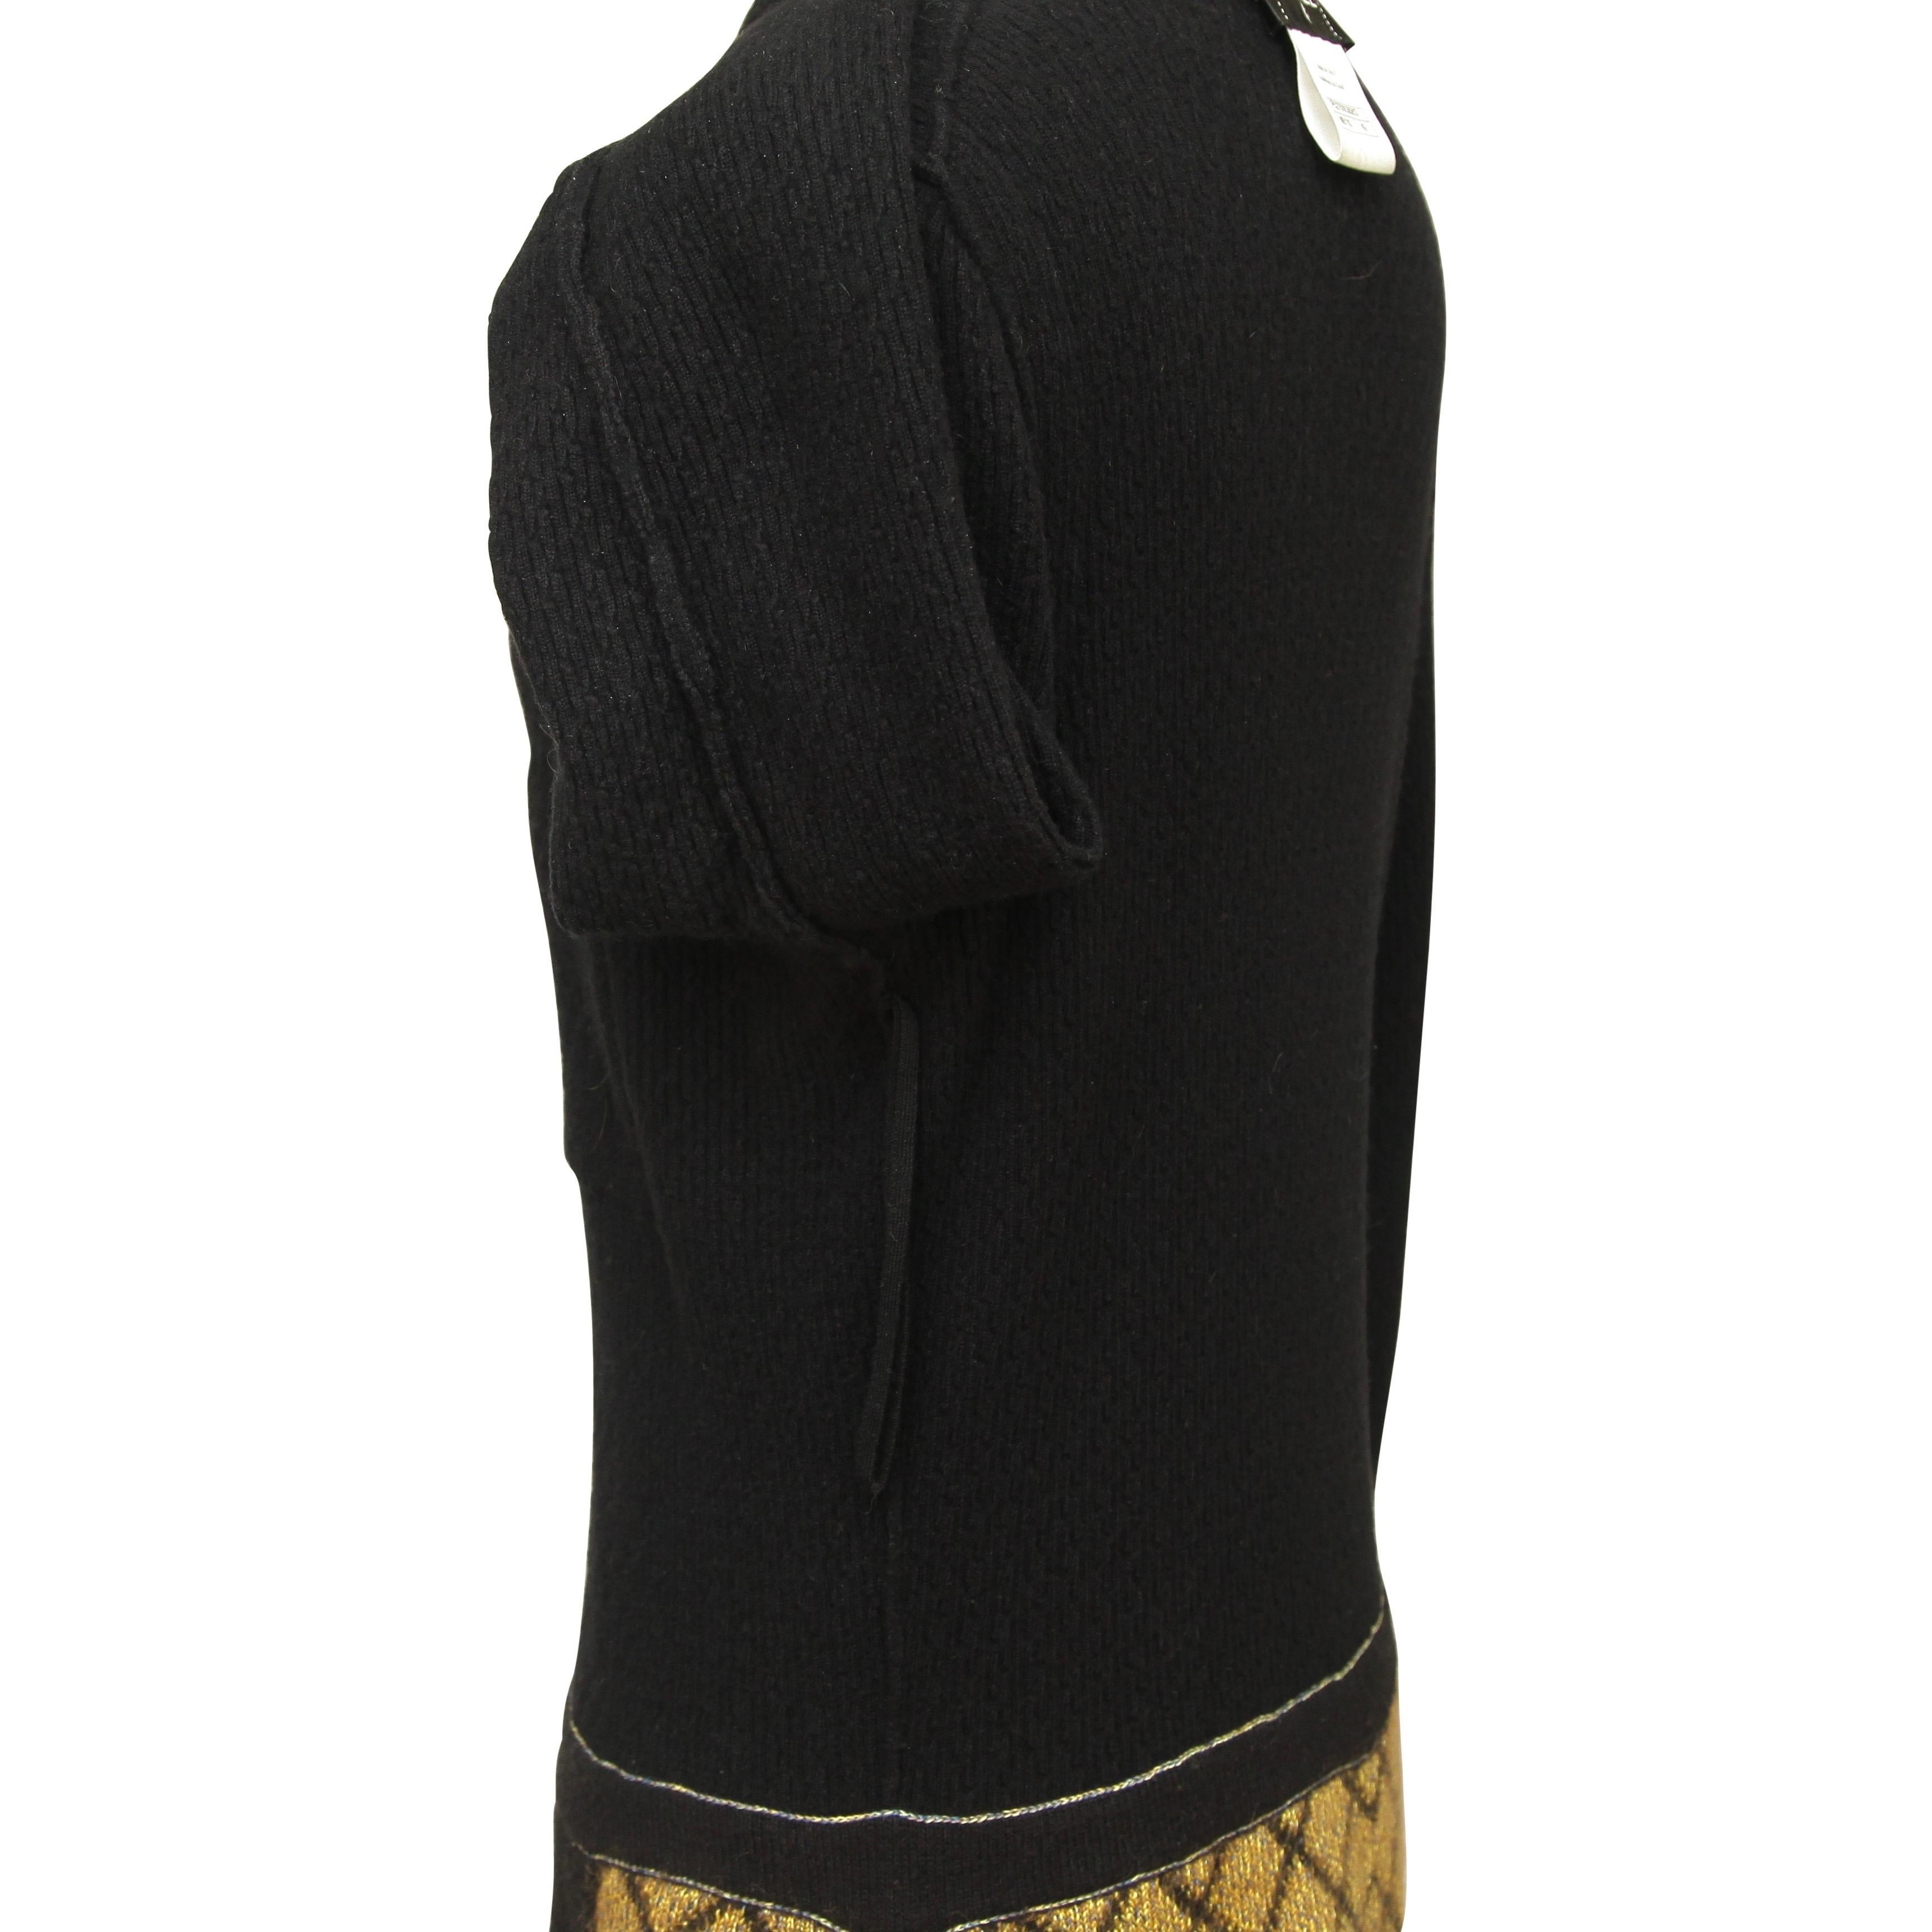 CHANEL Dress Knit Sweater Black Gold Camellia Long Sleeve Cashmere Sz 42 2015 5